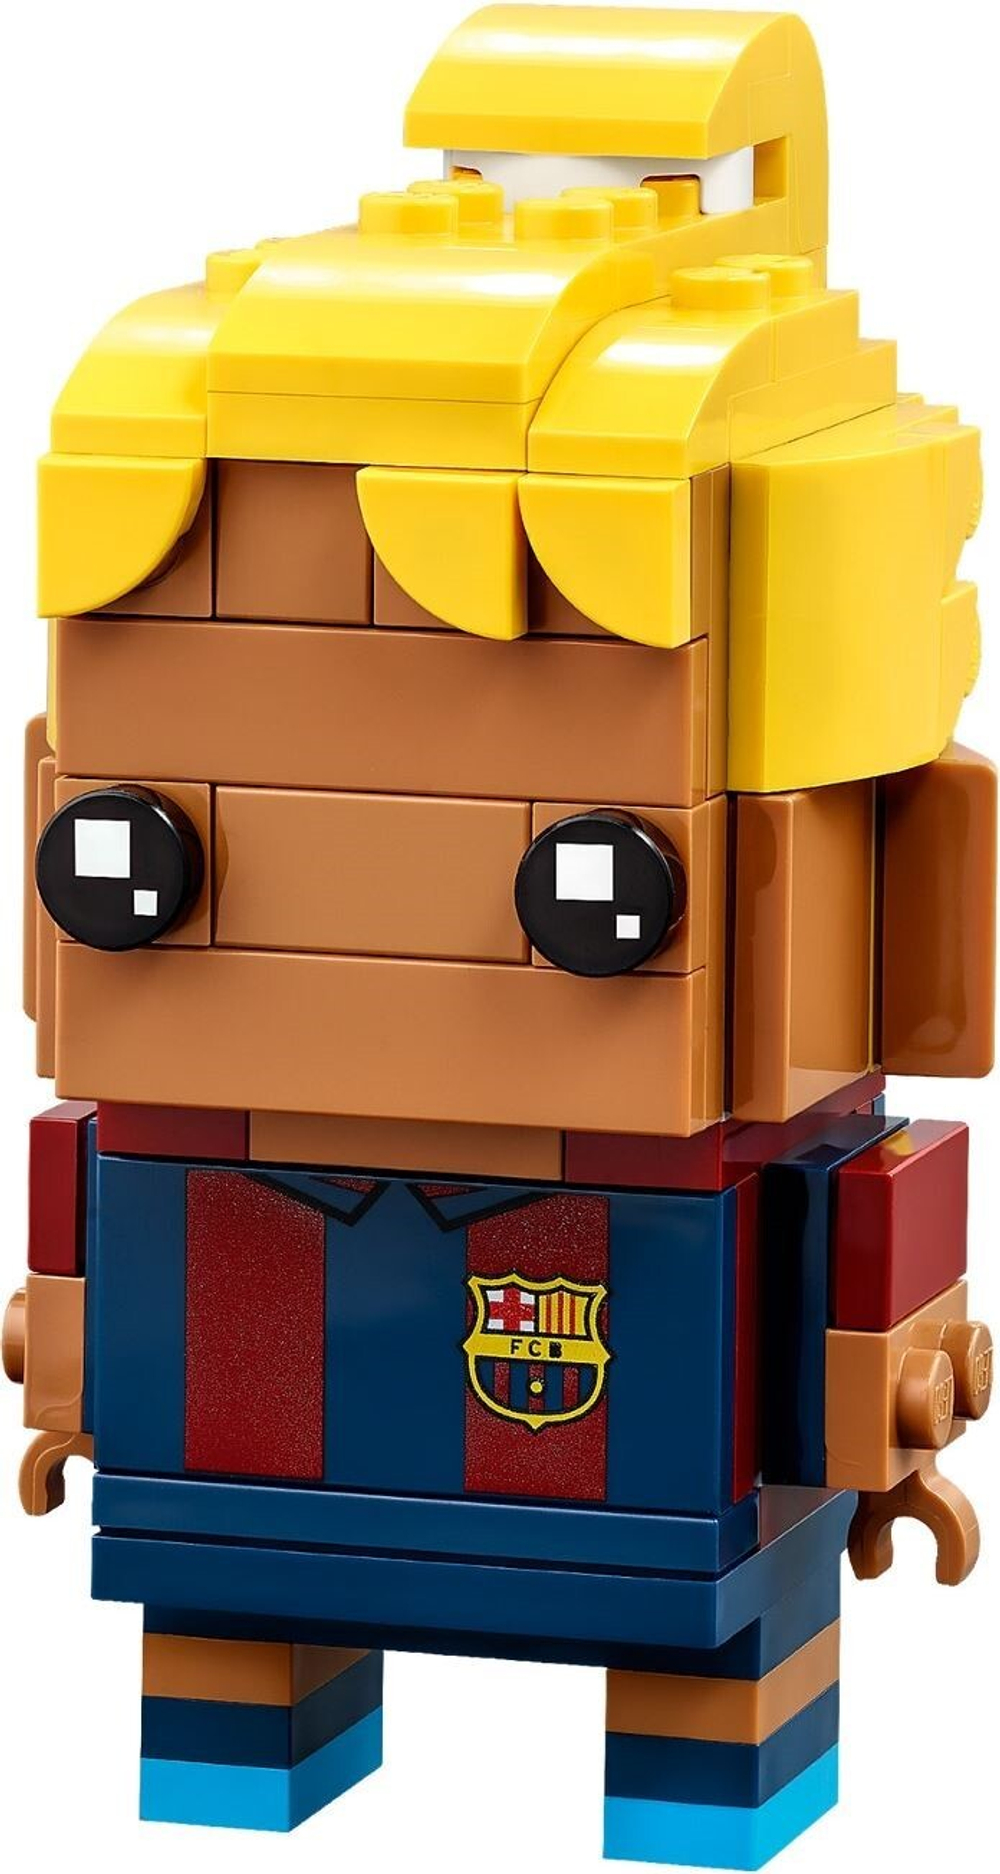 Конструктор LEGO BrickHeadz 40542 ФК Барселона Брикхэдз